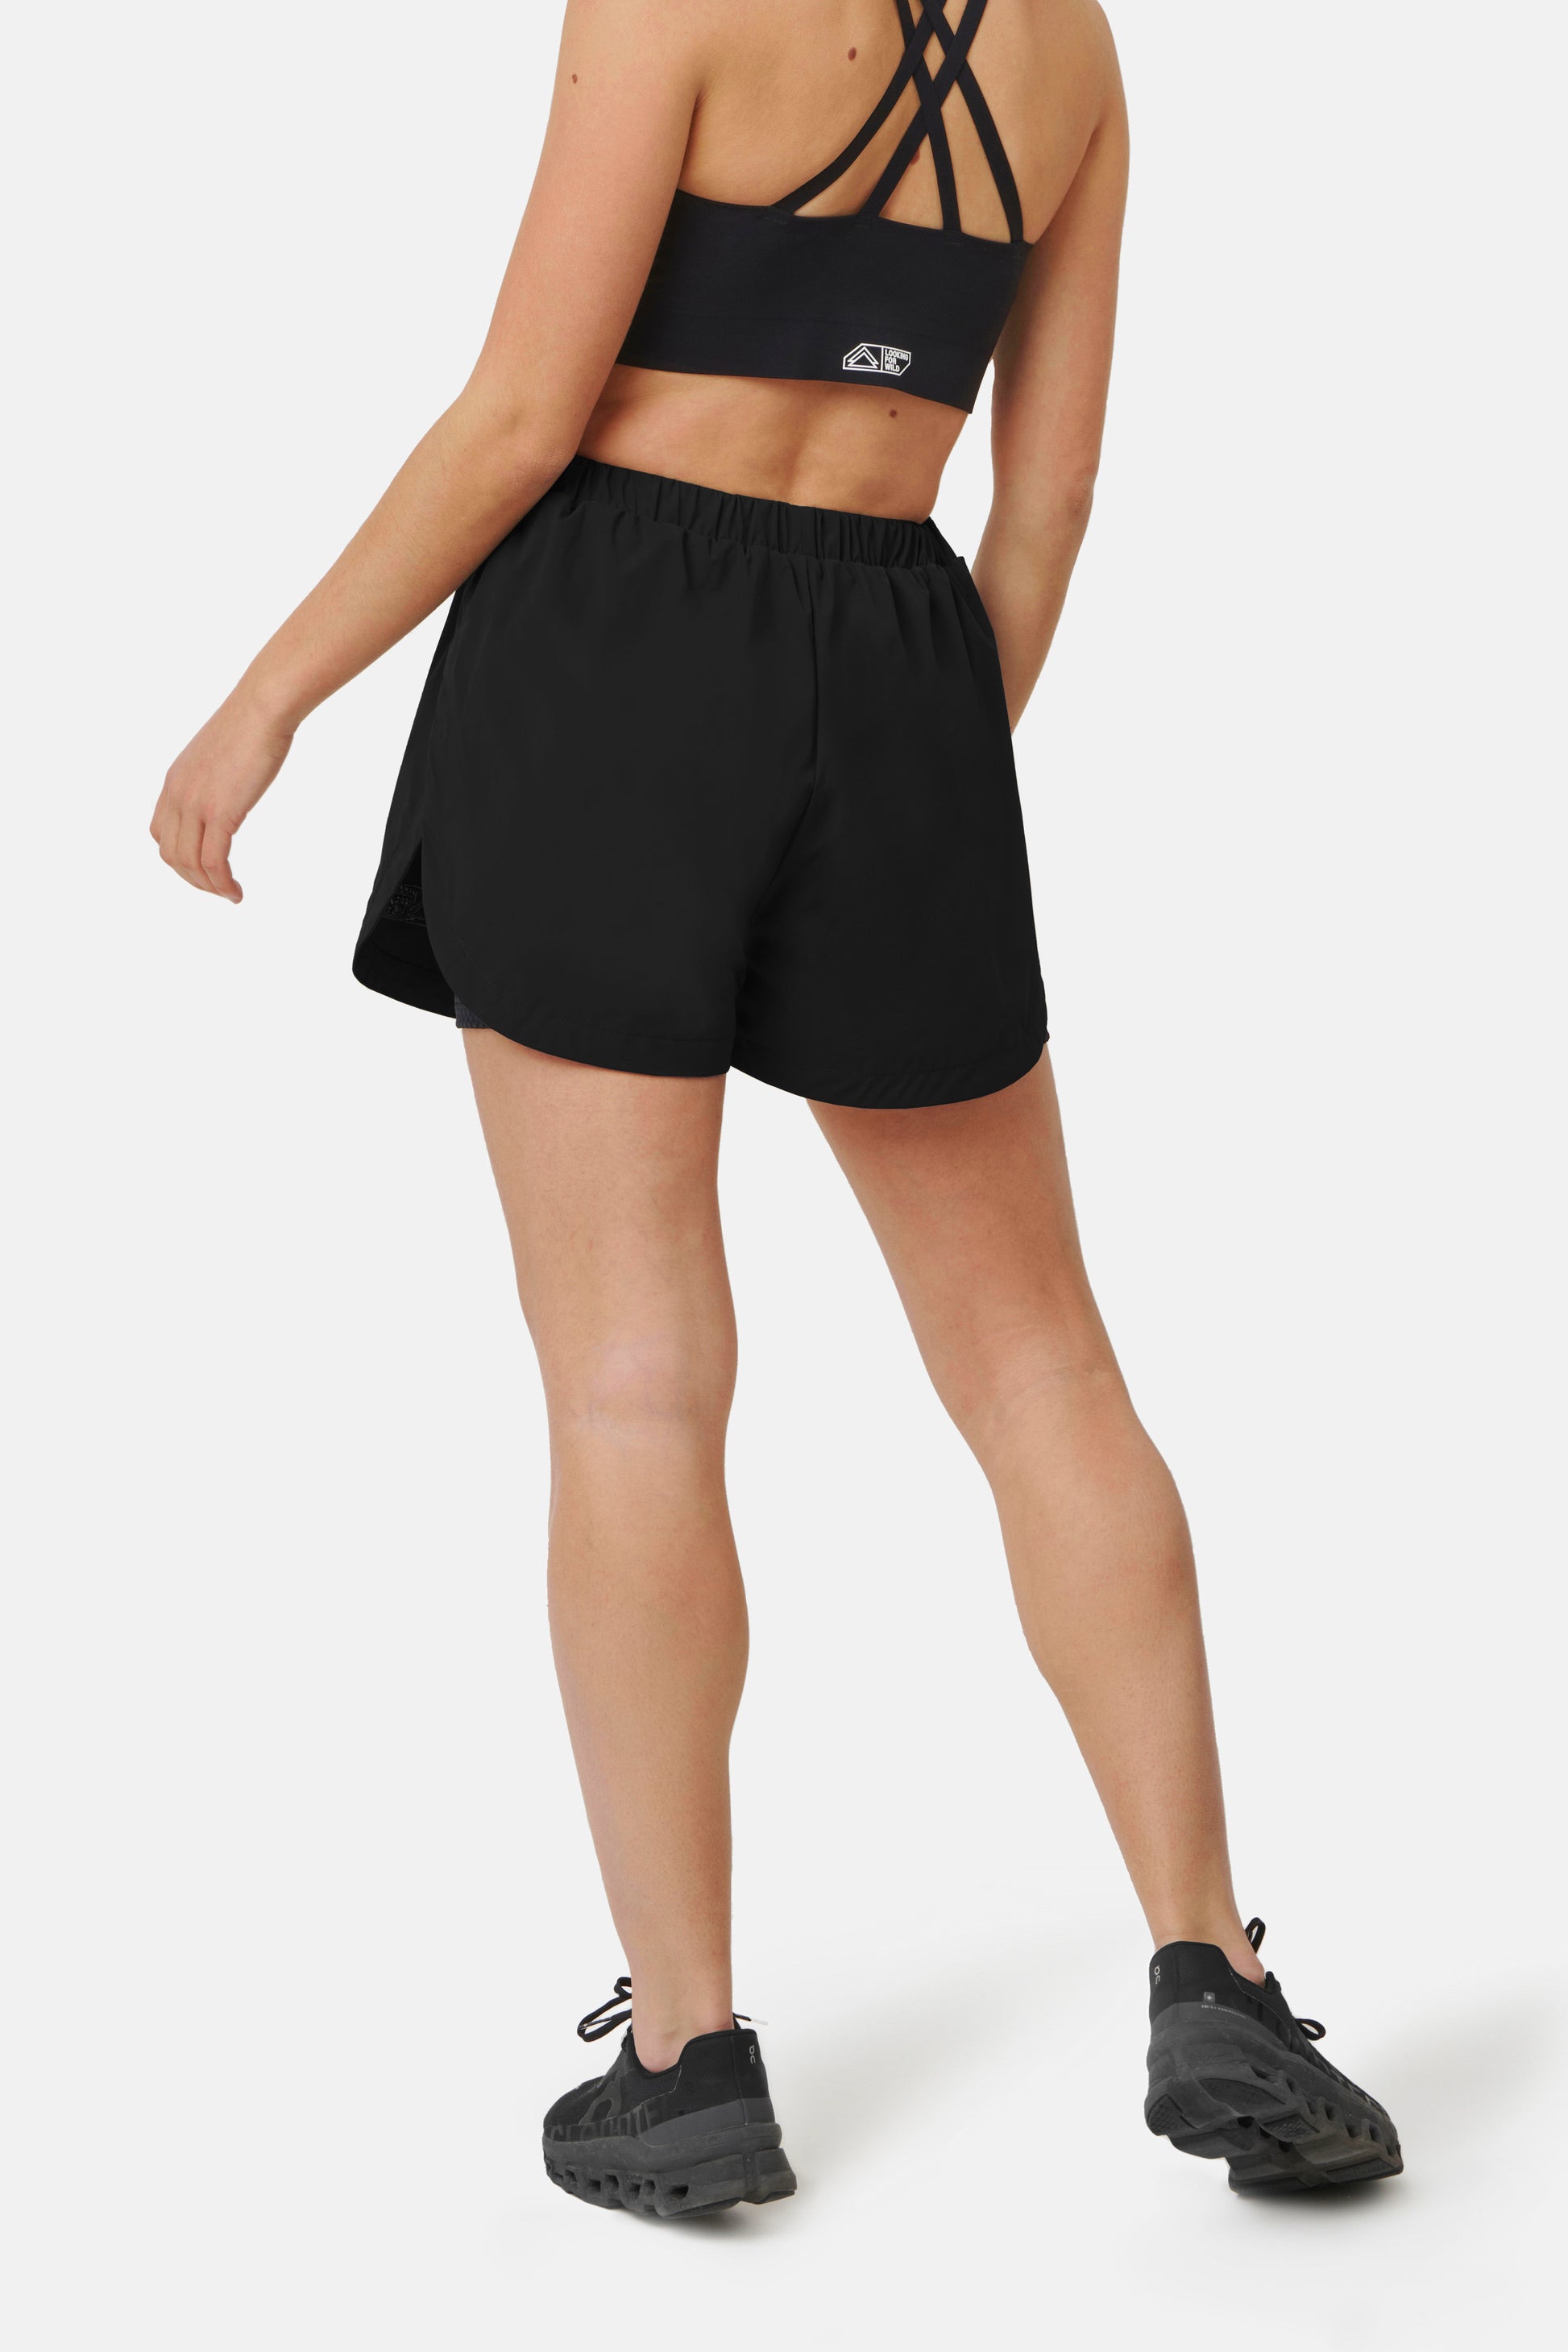 Hava Damen Shorts PIRATE BLACK